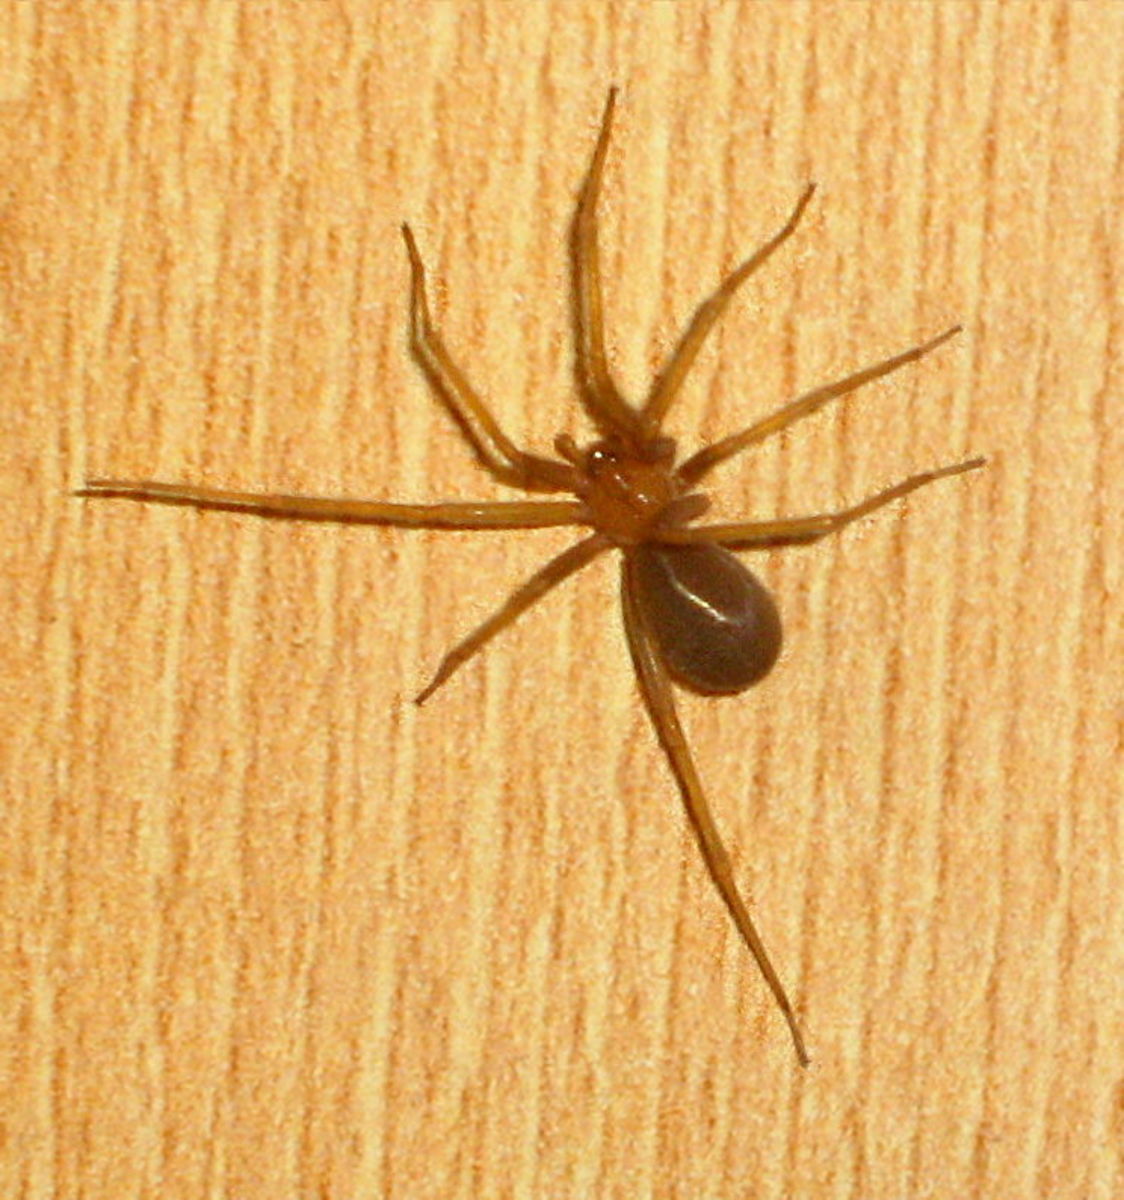 Spider Bites: Scary Skin Staph Stuff - Orange County Pediatric and